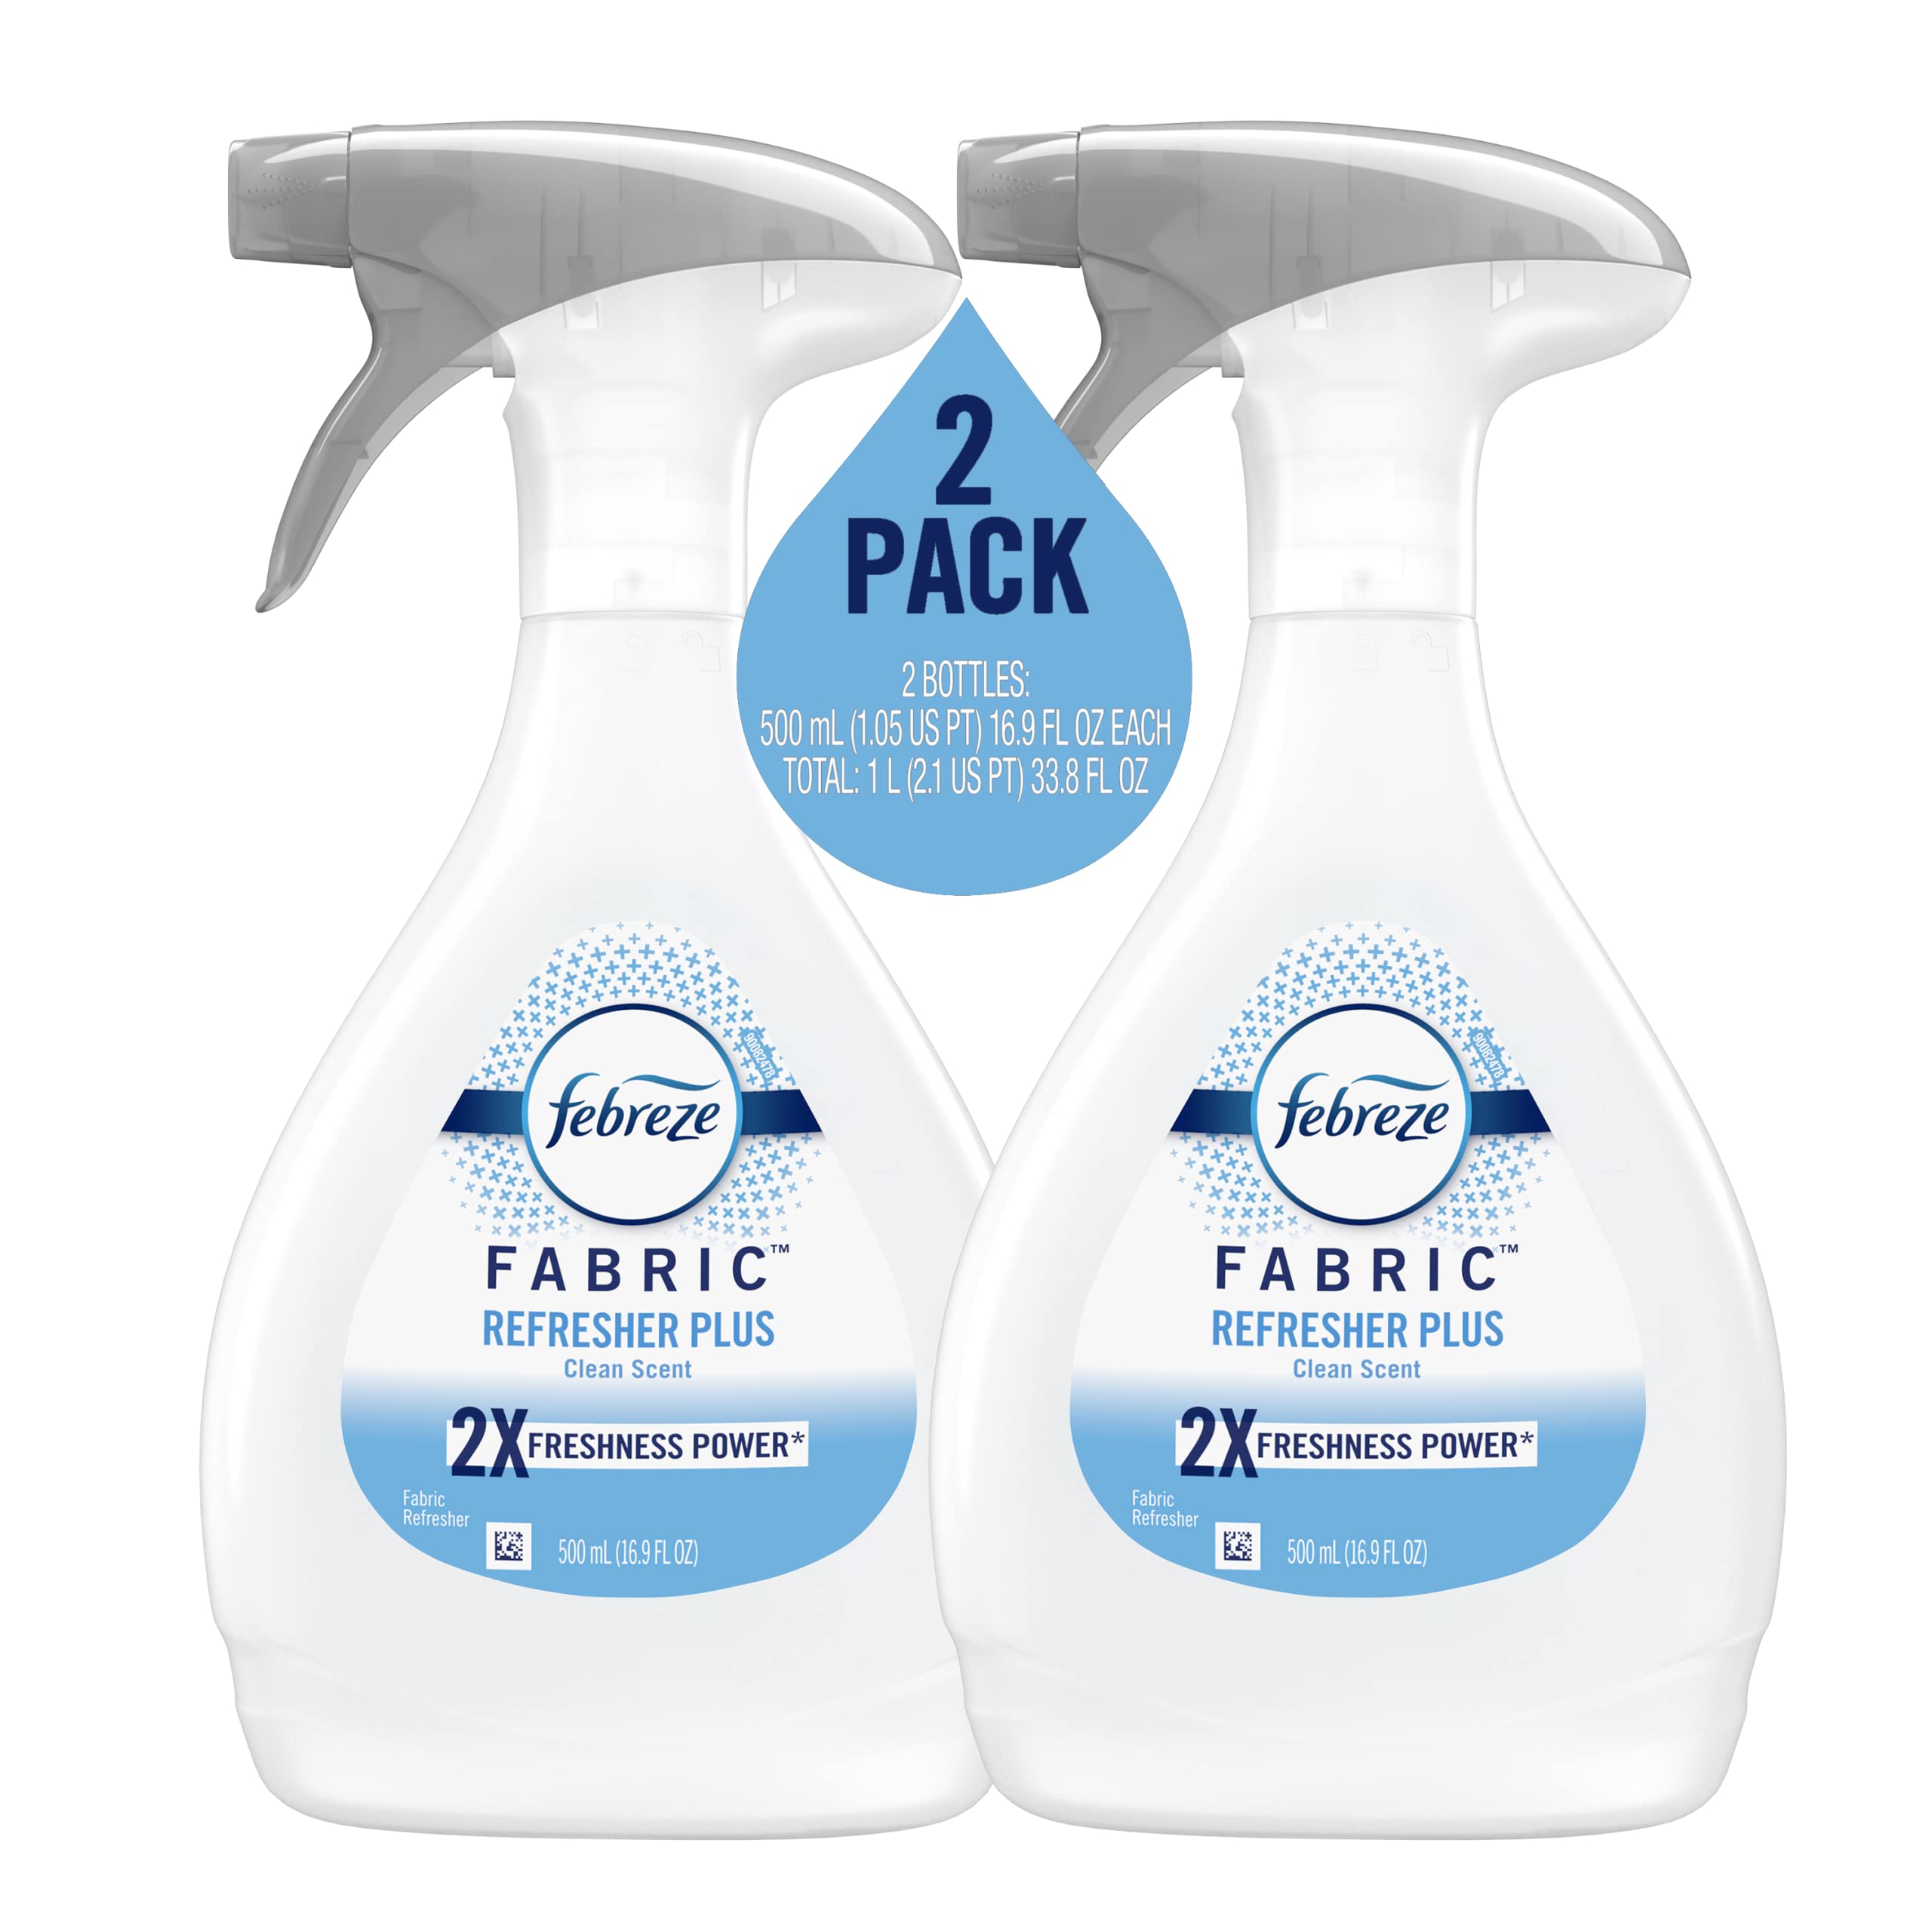 Febreze Fabric Refresher Pet Odour Eliminator Spray, 500ml